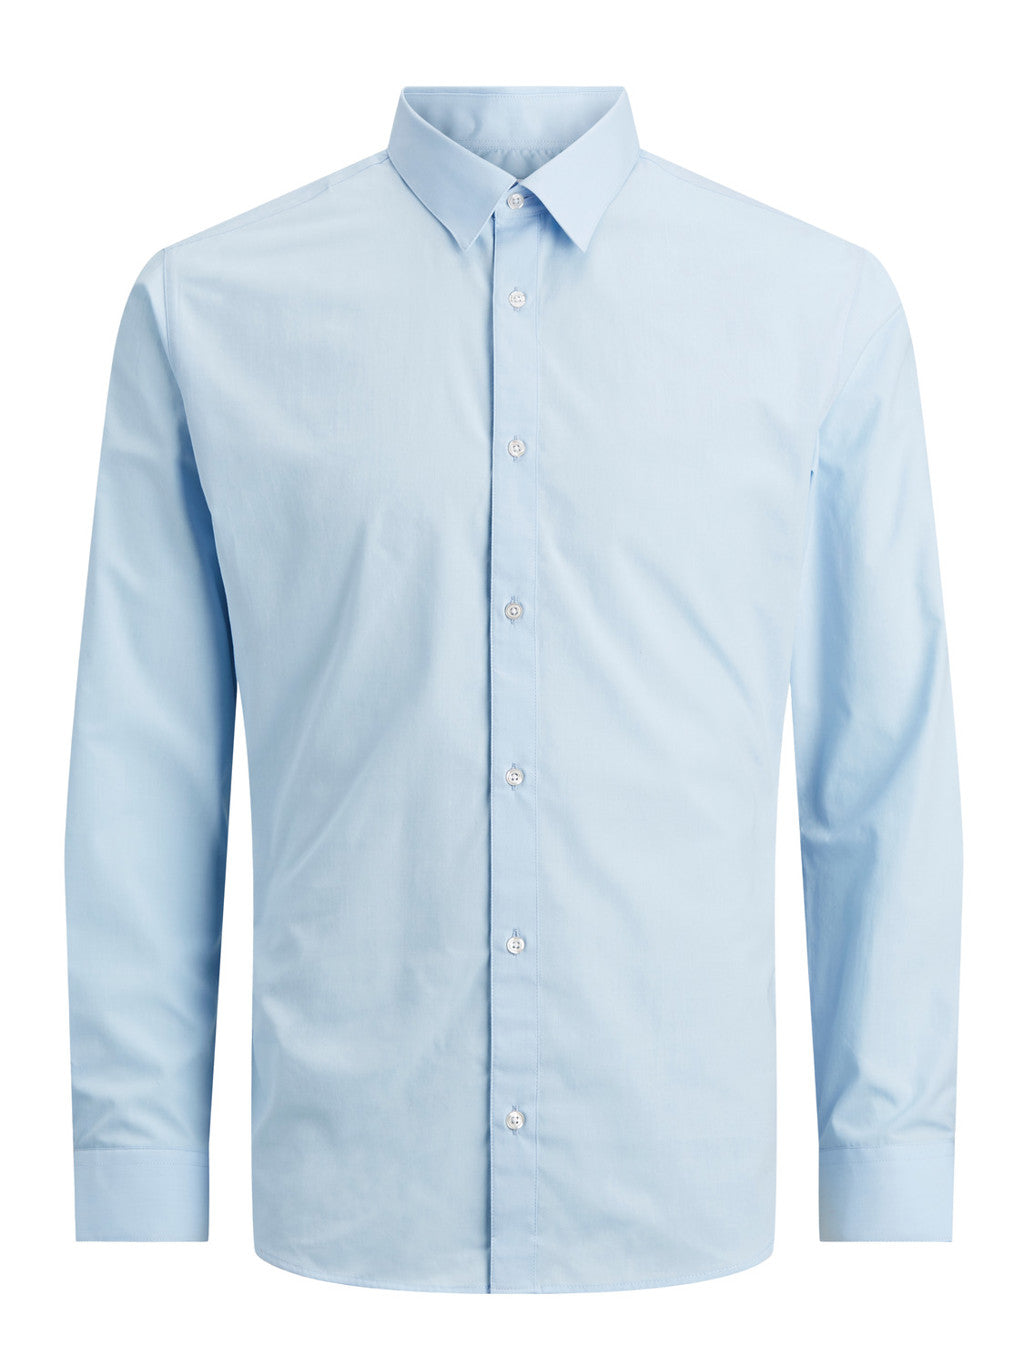 Jack & Jones Boy's Blue Long Sleeve Shirt